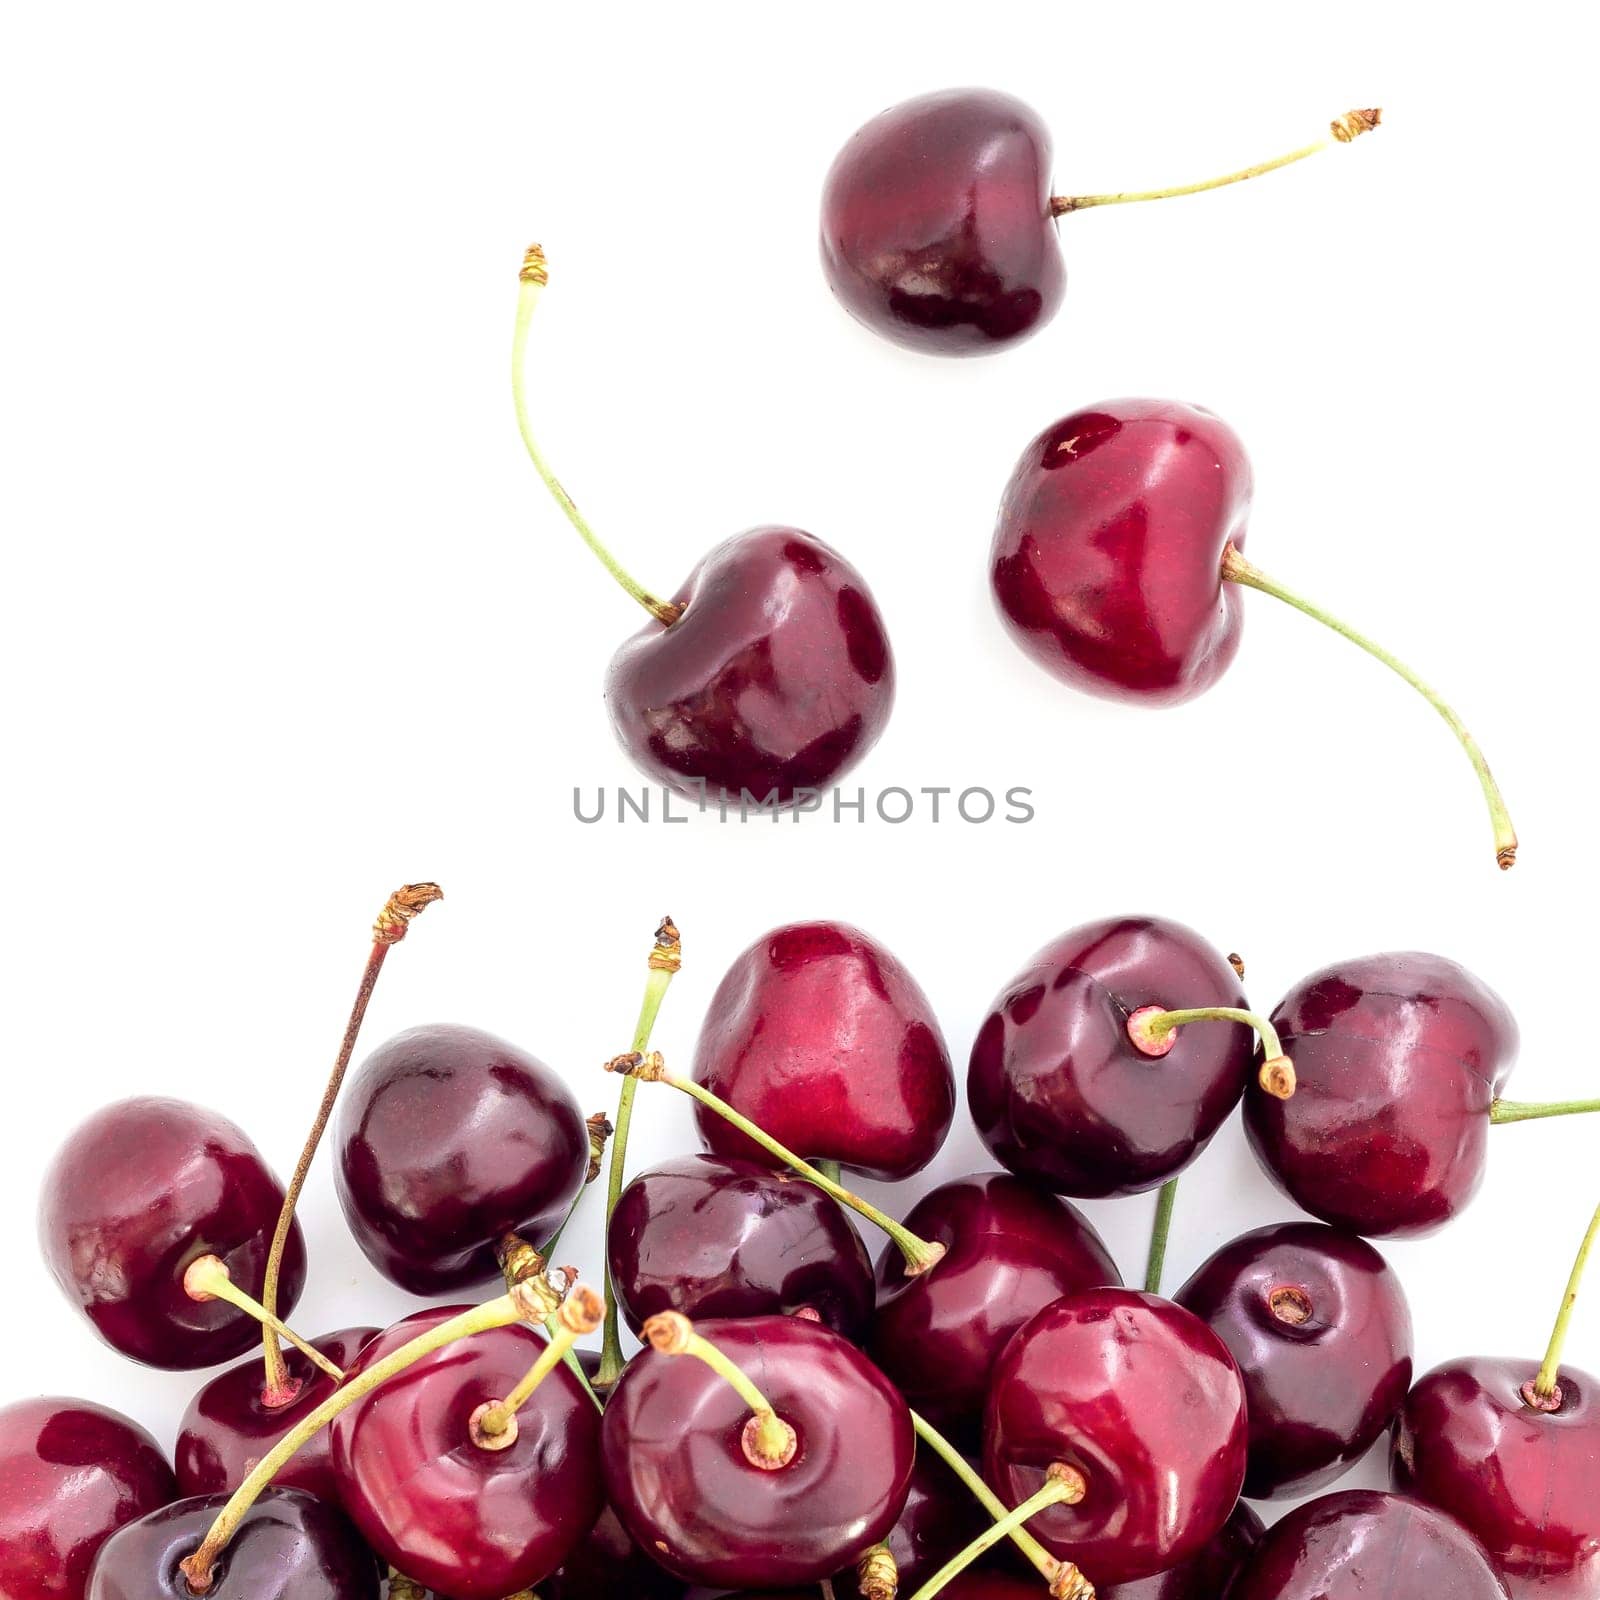 Cherries on white background by germanopoli